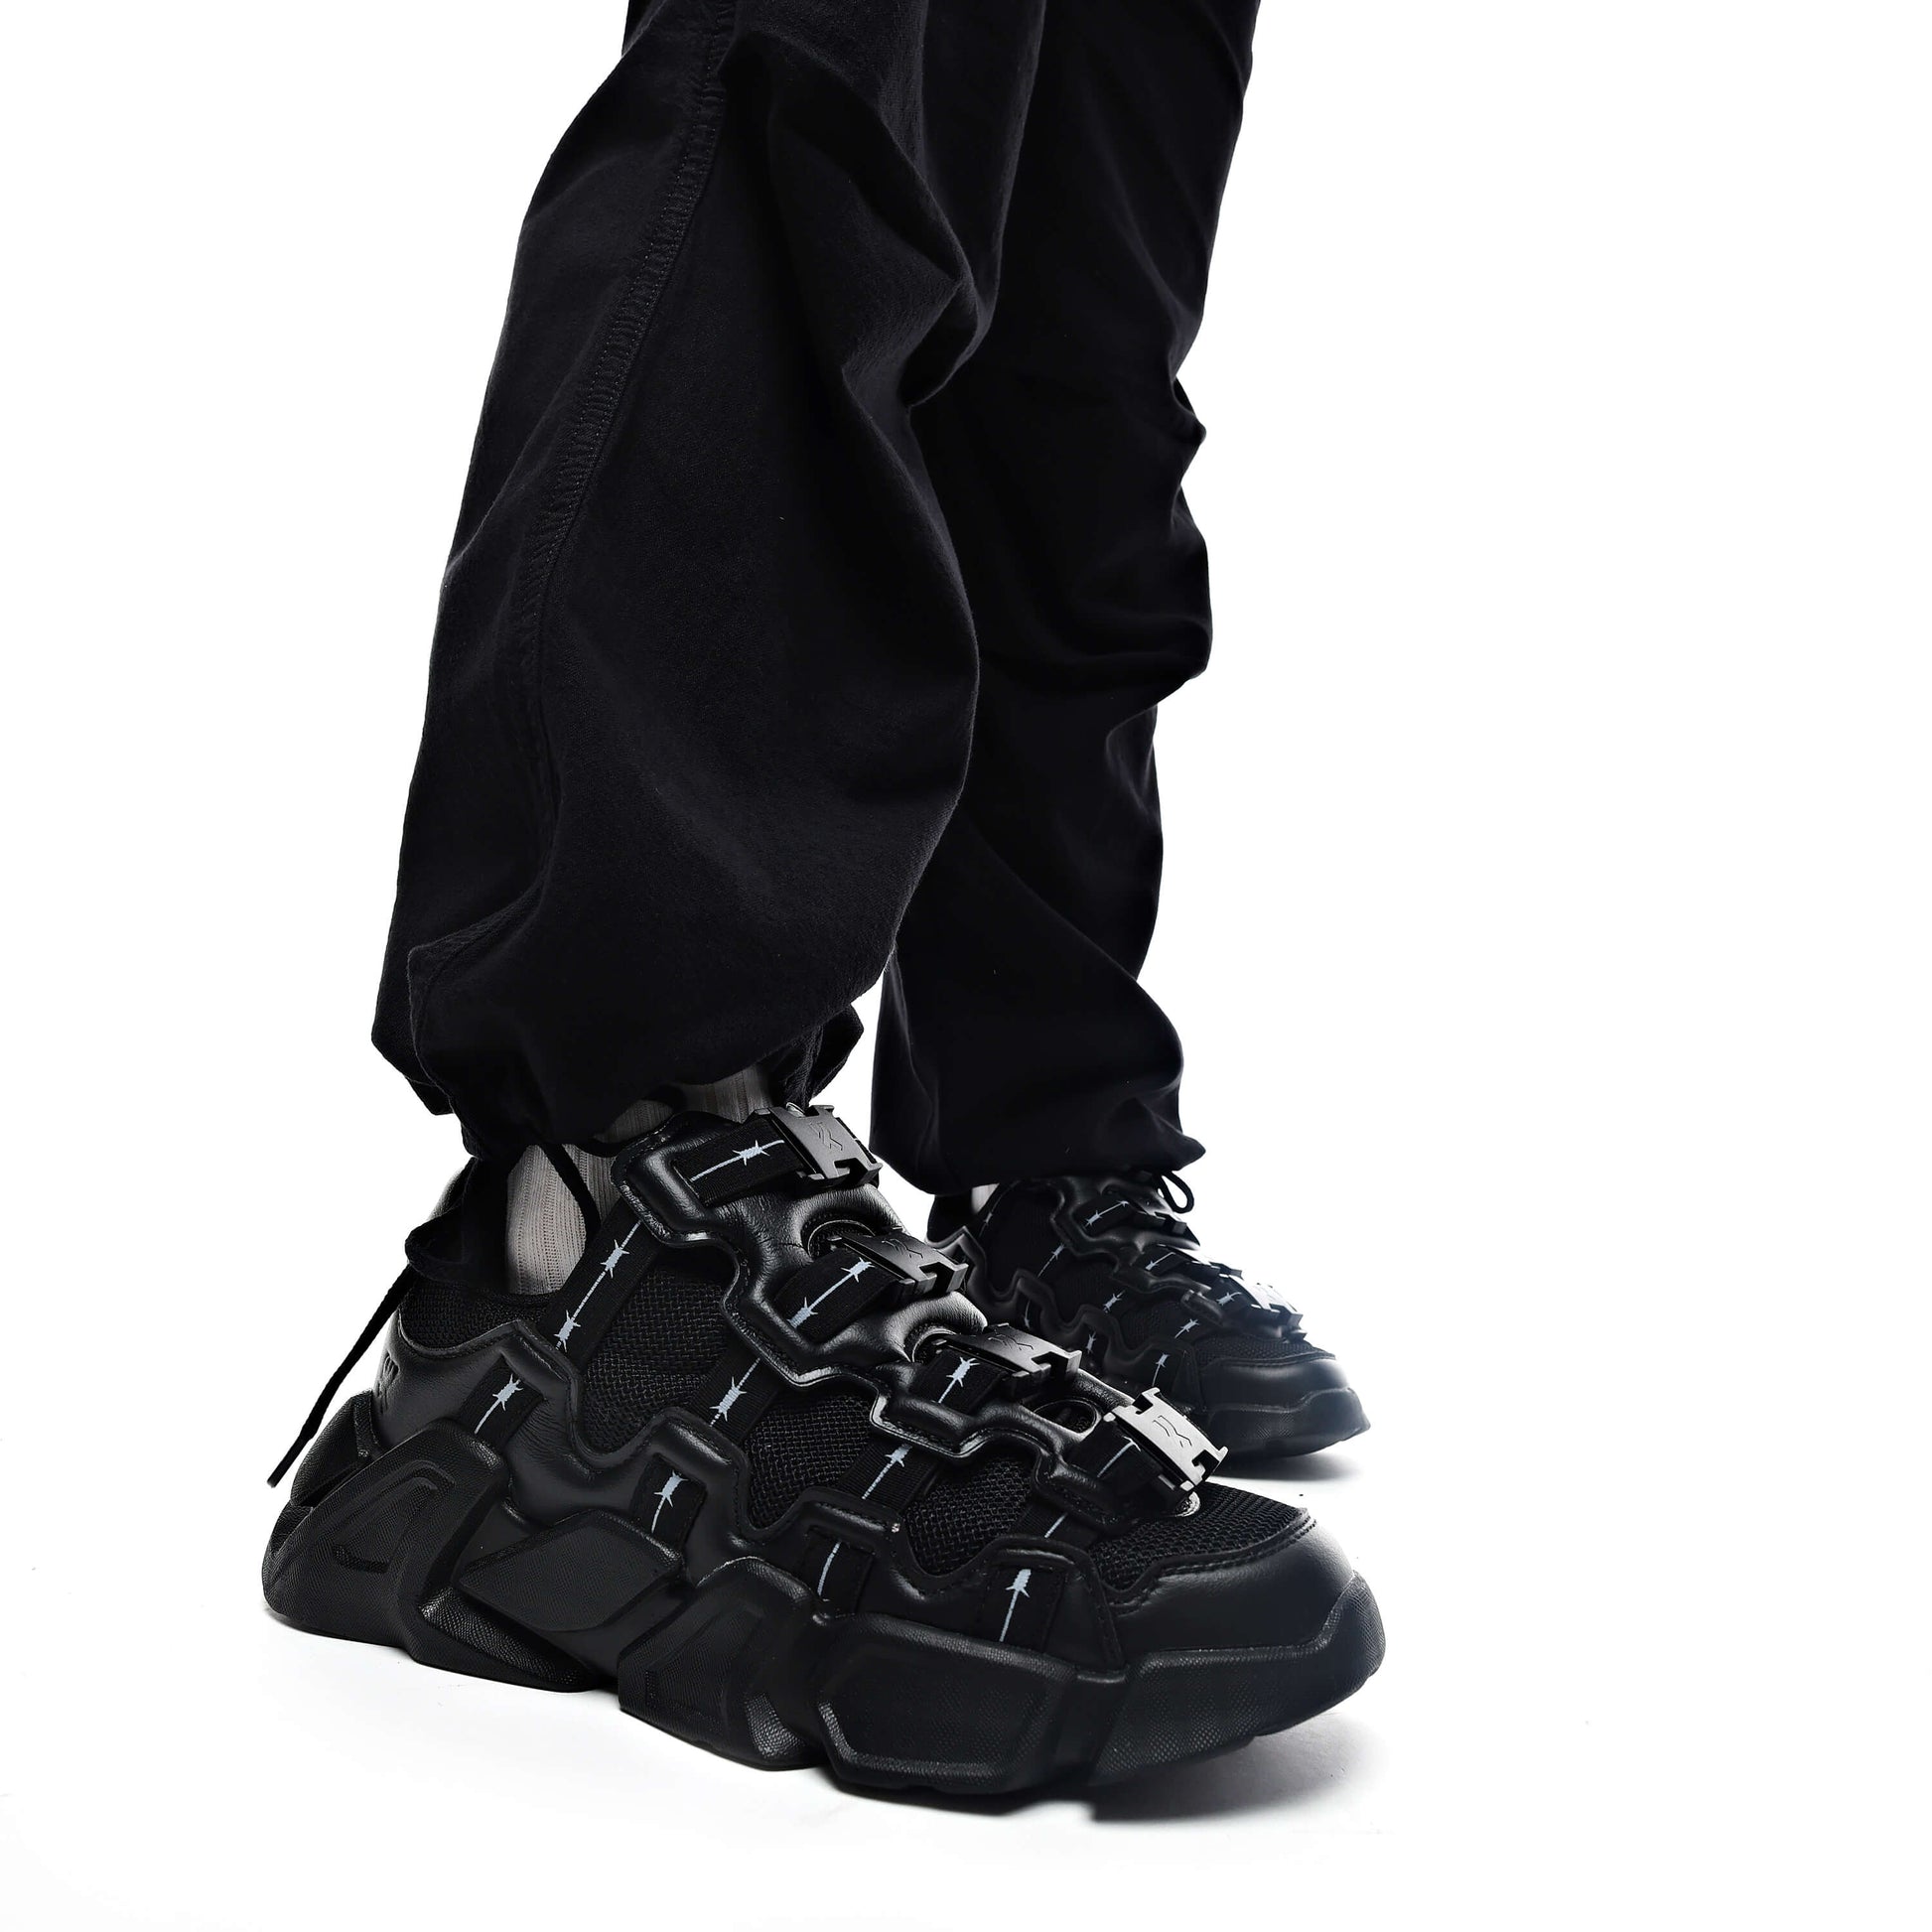 The Beast Men's Black Wire Trainers - Trainers - KOI Footwear - Black - Model Side View